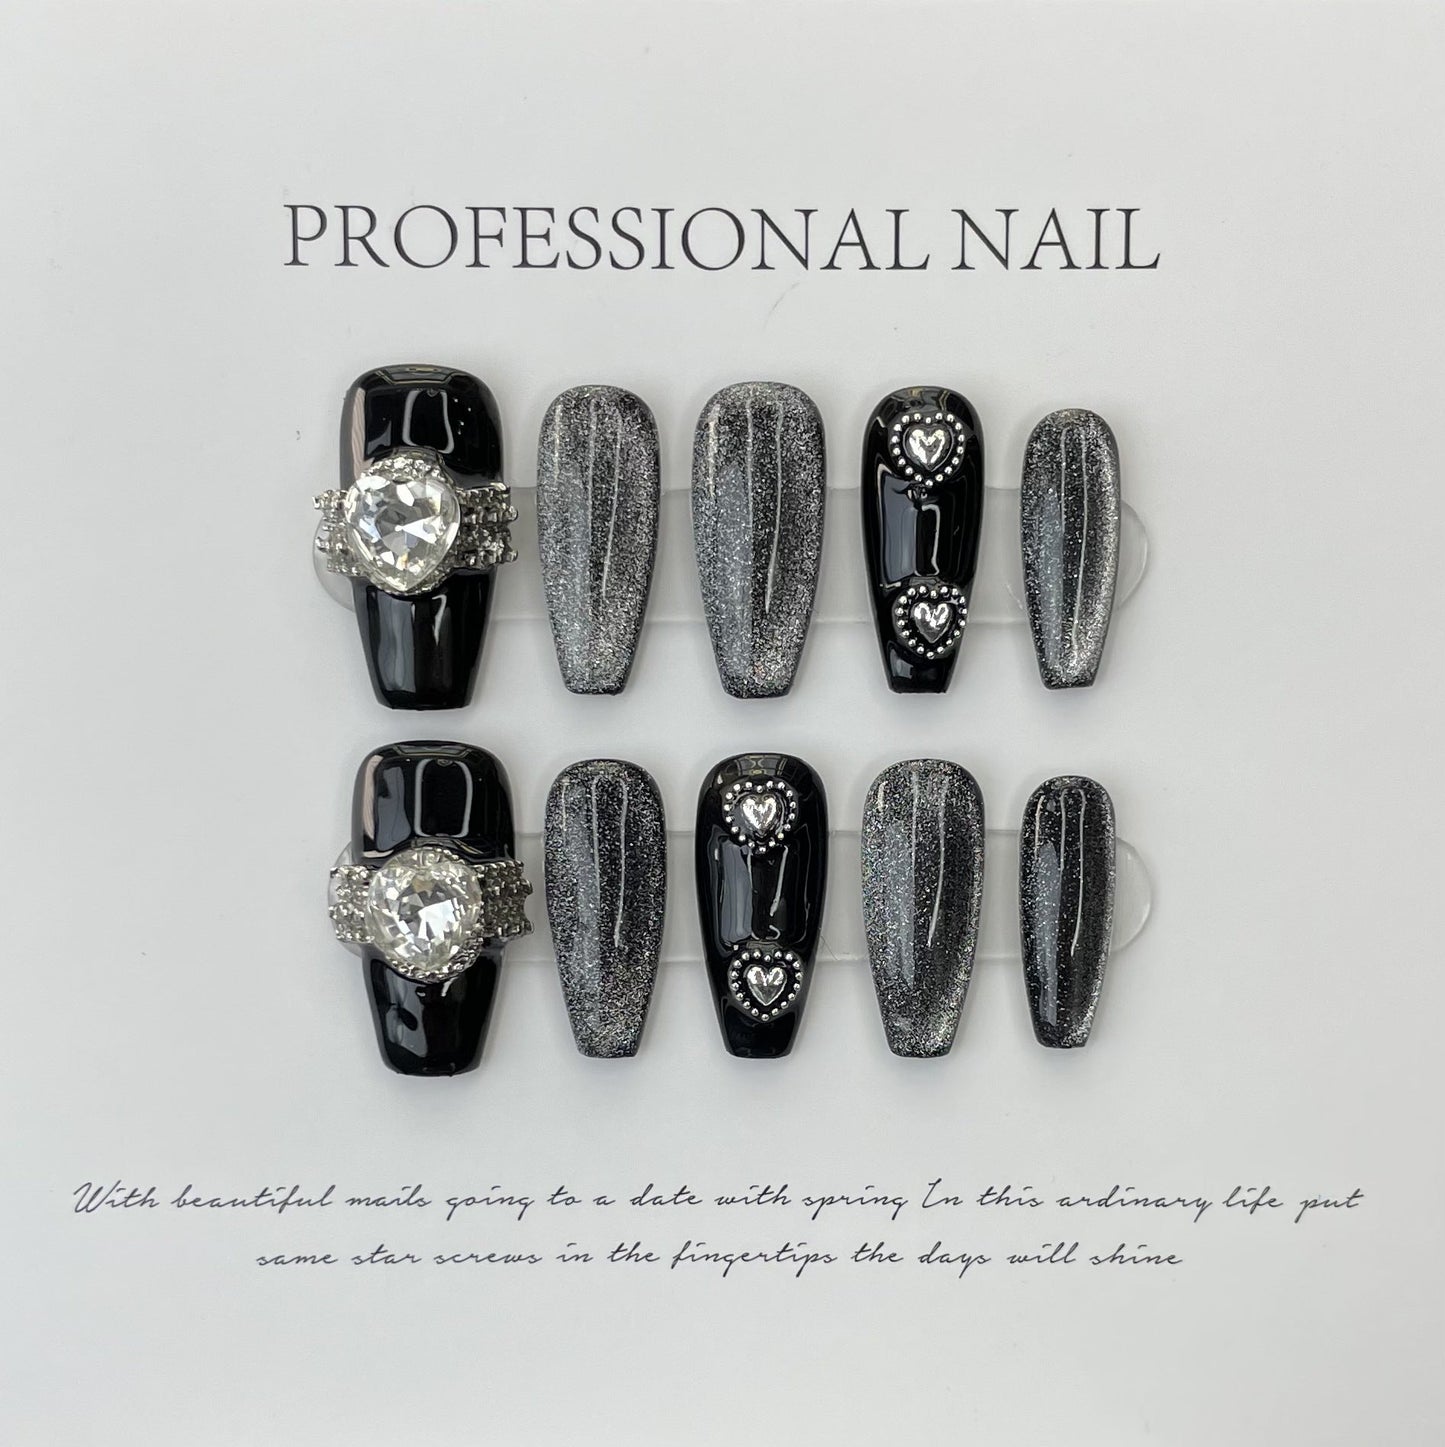 603/604 Black Cateye Effect  press on nails 100% handmade false nails black sliver